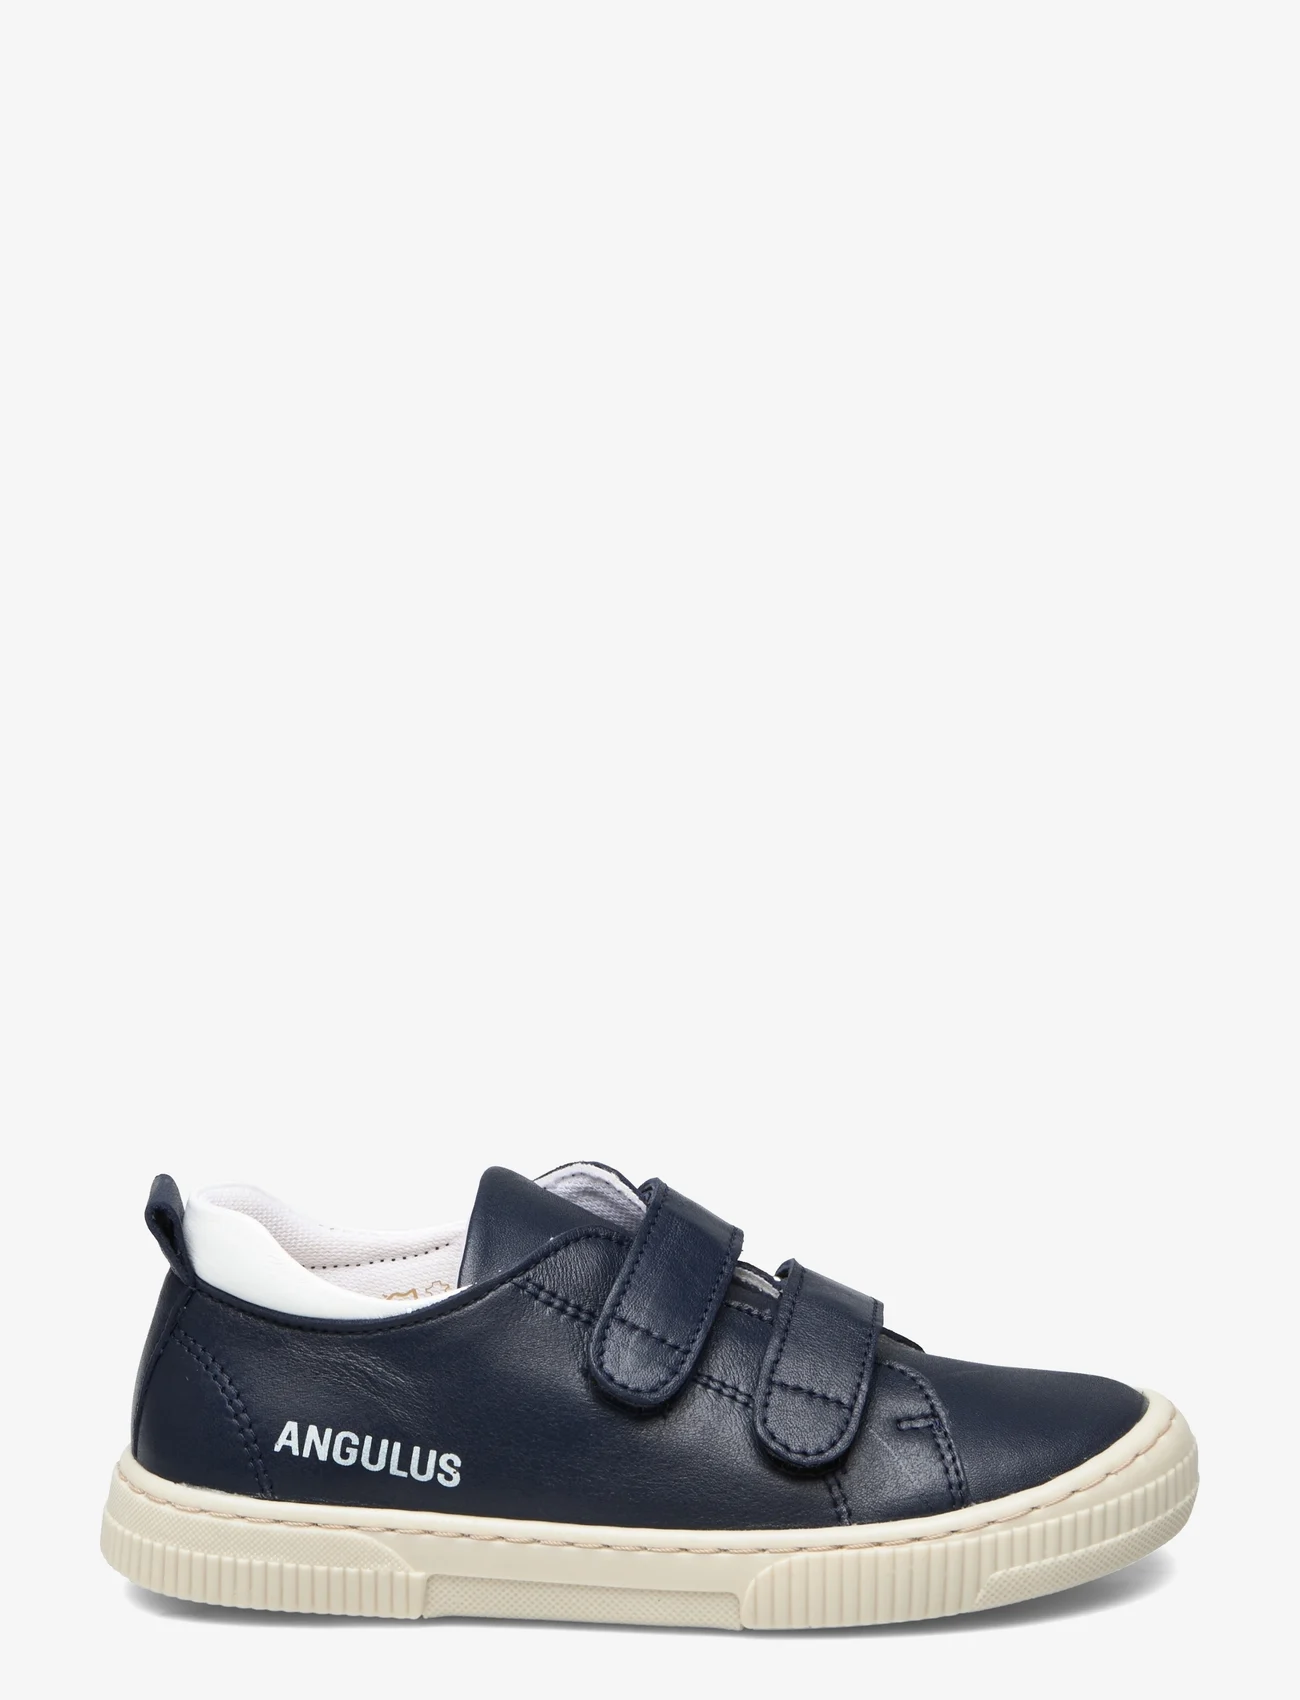 ANGULUS - Shoes - flat - with velcro - gode sommertilbud - 2585/1521 navy/white - 1